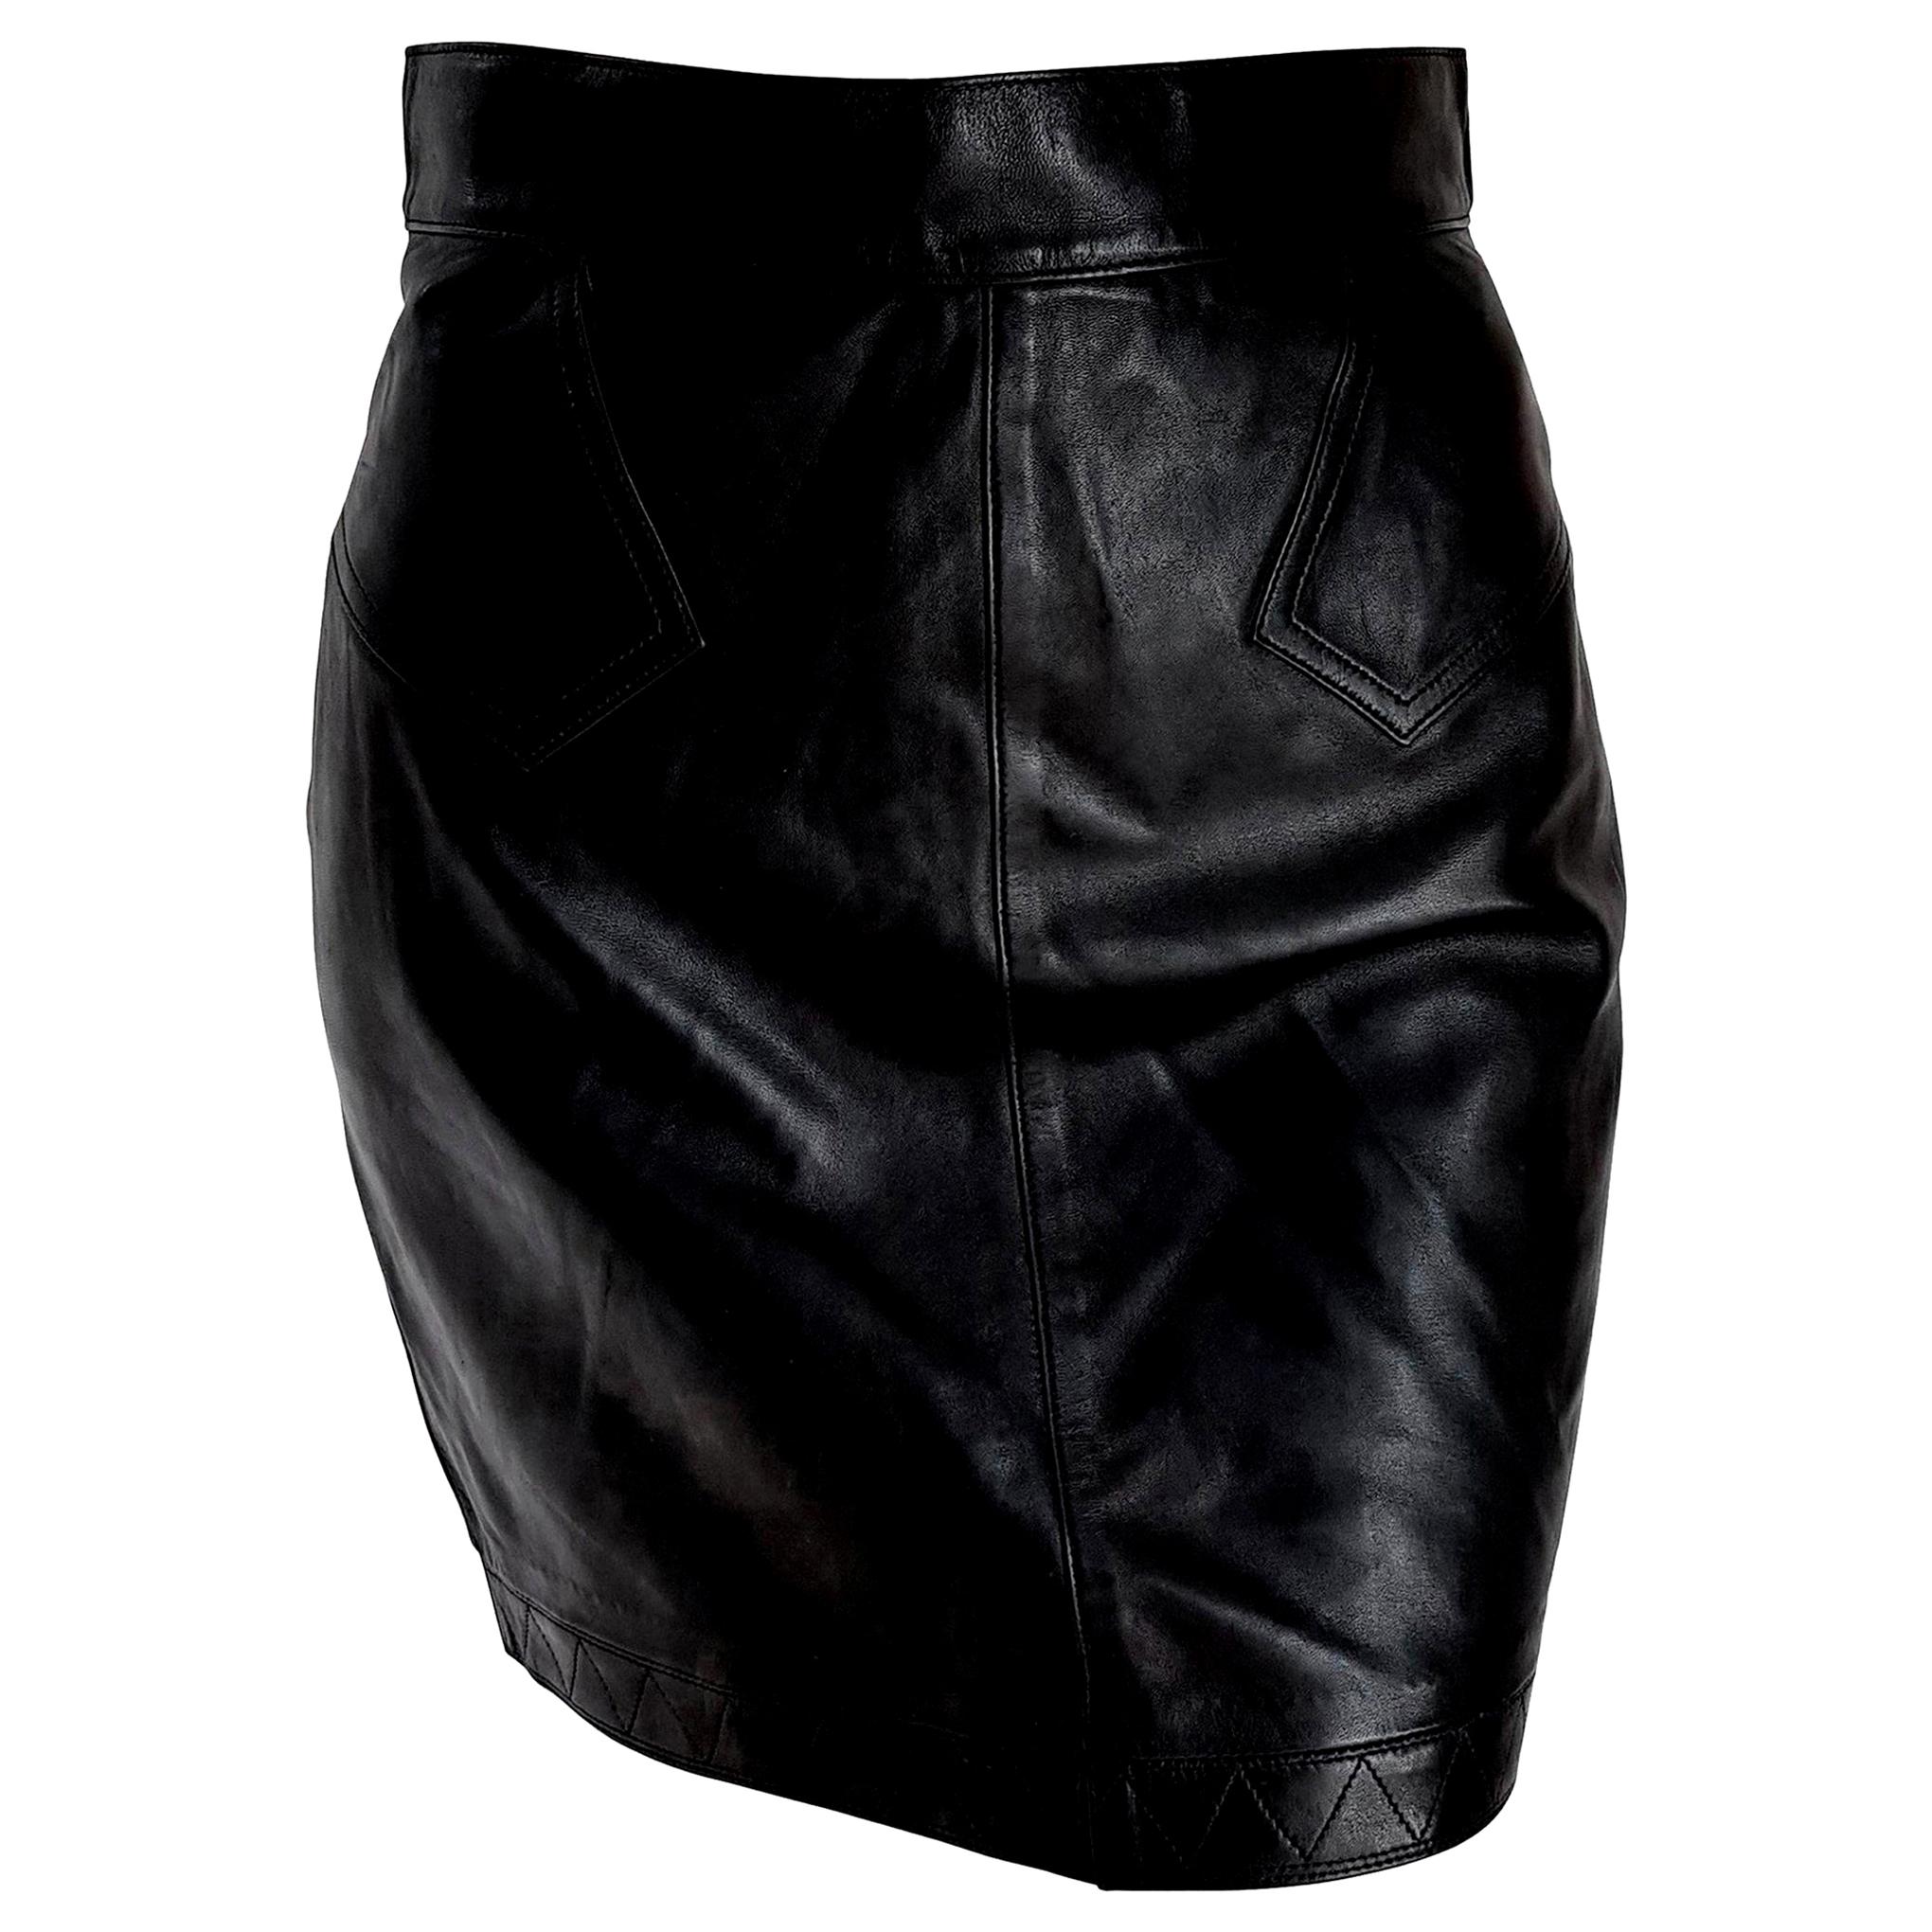 ALAIA "New" Black Leather Mini Skirt - Unworn For Sale